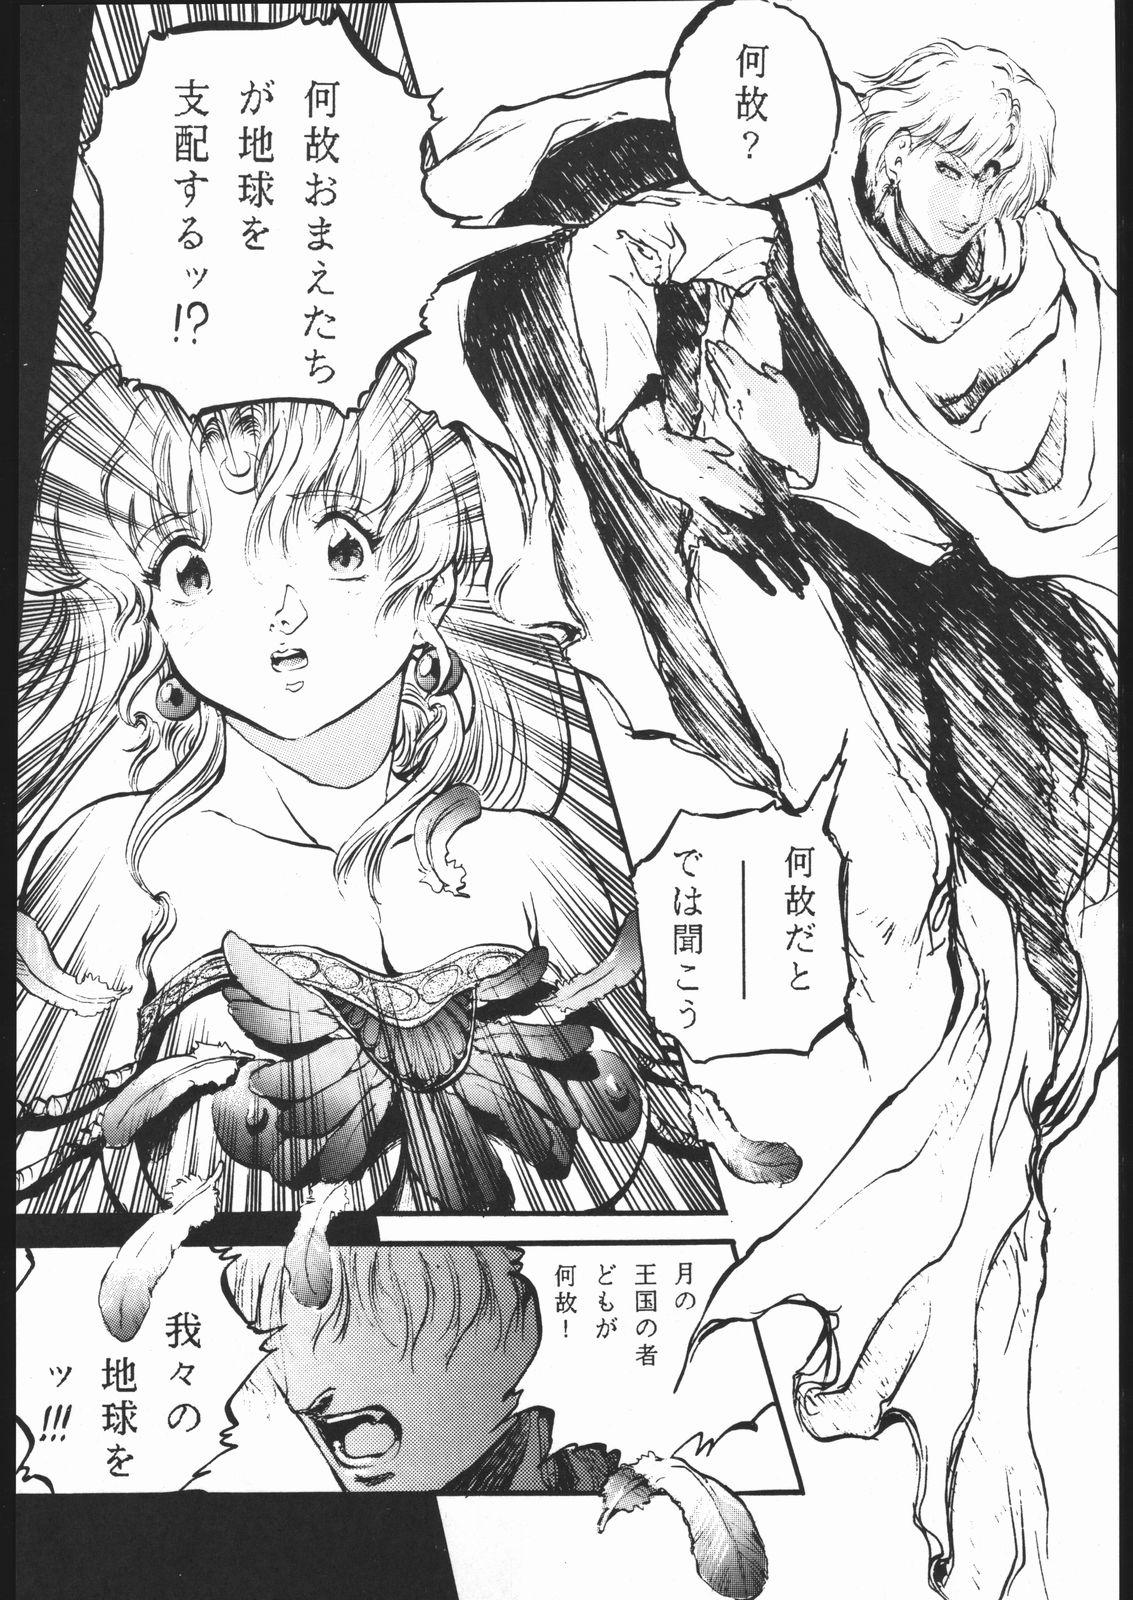 Mmf KATZE 8 - Sailor moon Tenchi muyo Ghost sweeper mikami Giant robo Victory gundam Rubia - Page 7